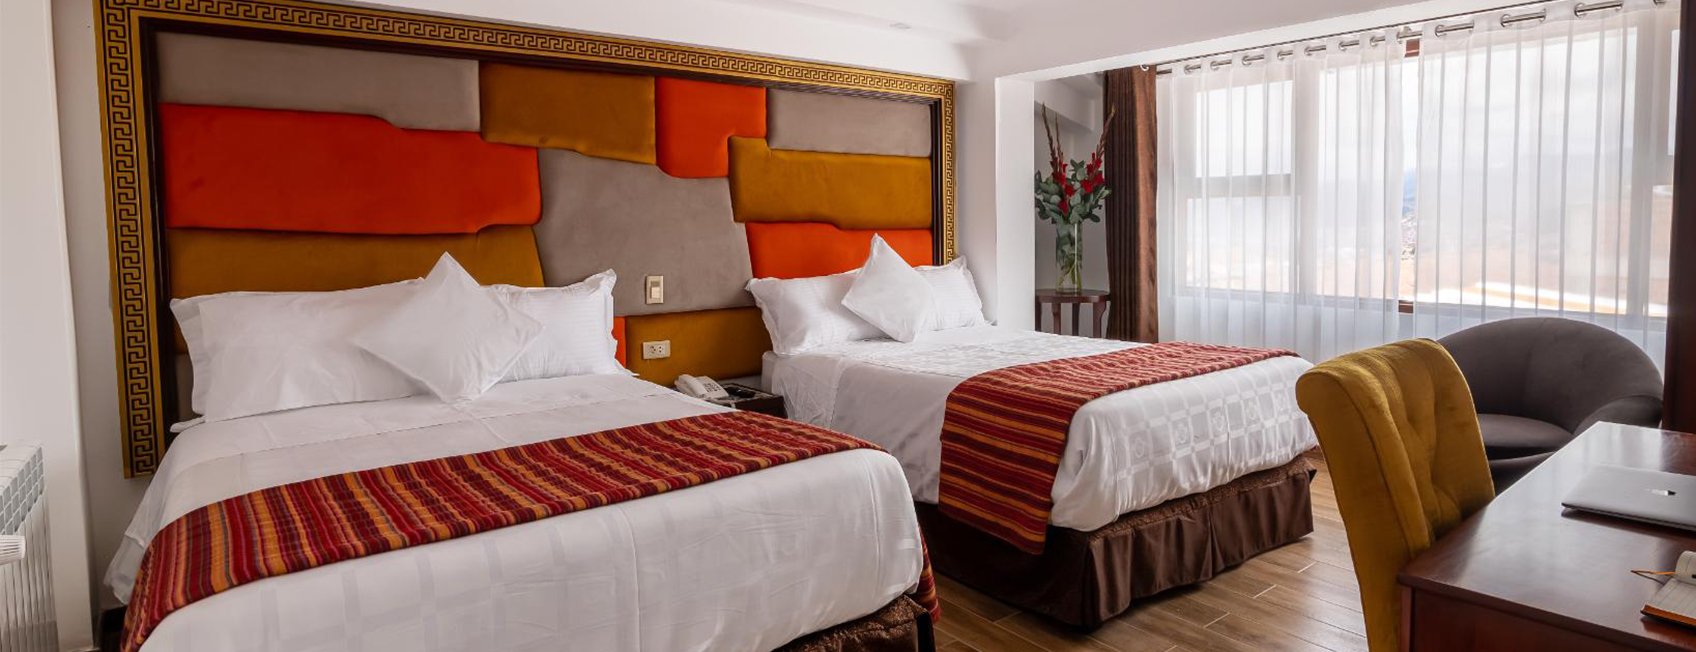 Hotel-Cusco-Doble-2